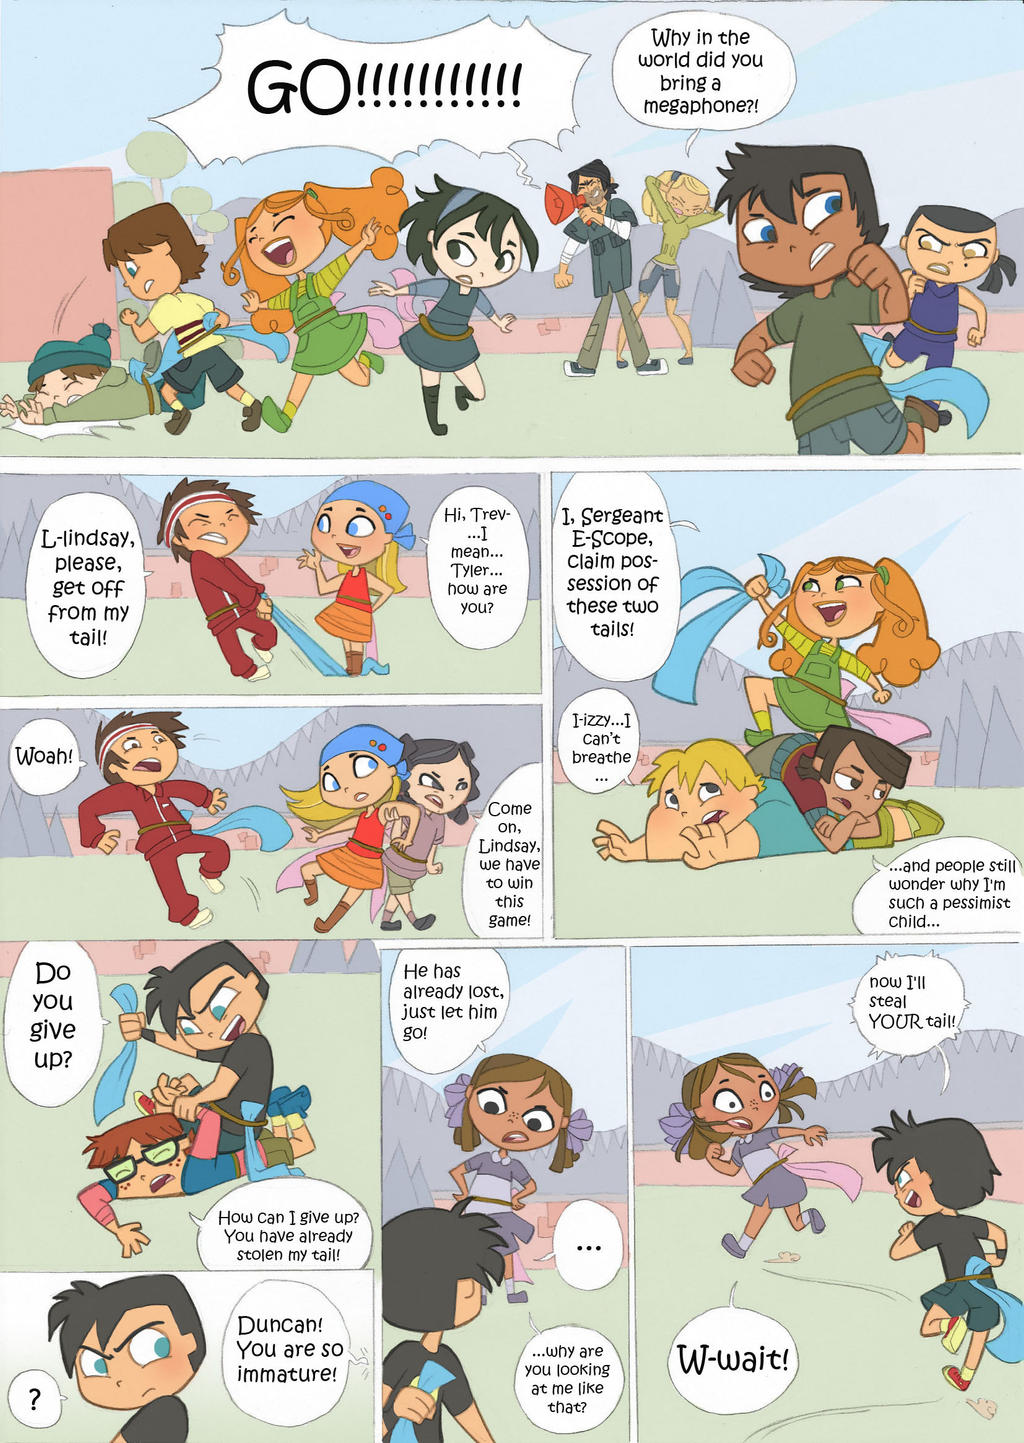 Total drama kids comic pag 10 by Kika-ila on DeviantArt